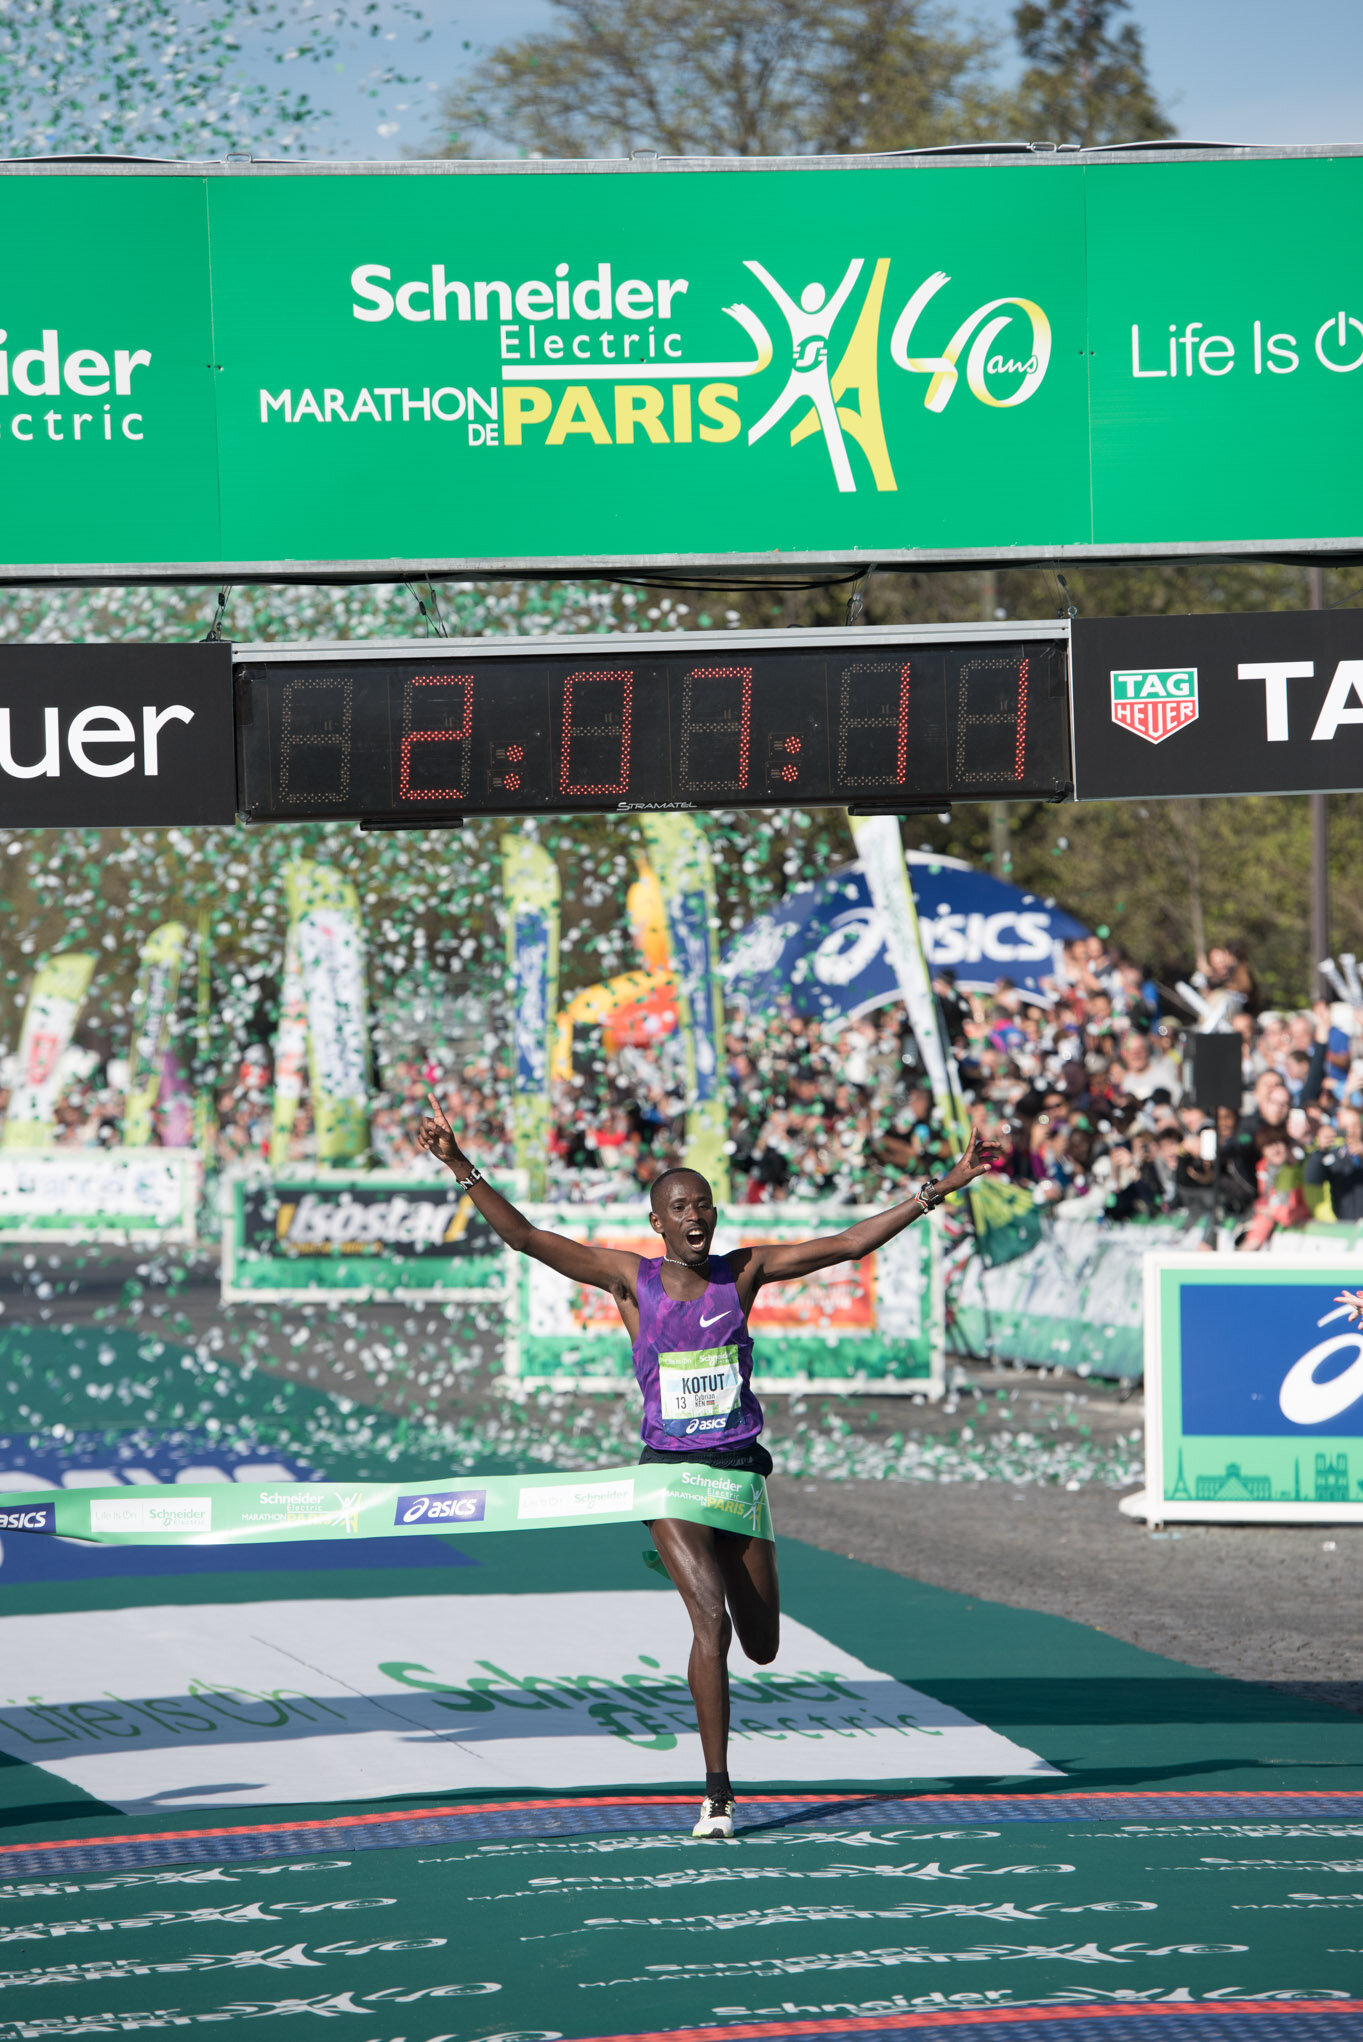    Paris Marathon for Schneider Electric    Finish line victory 